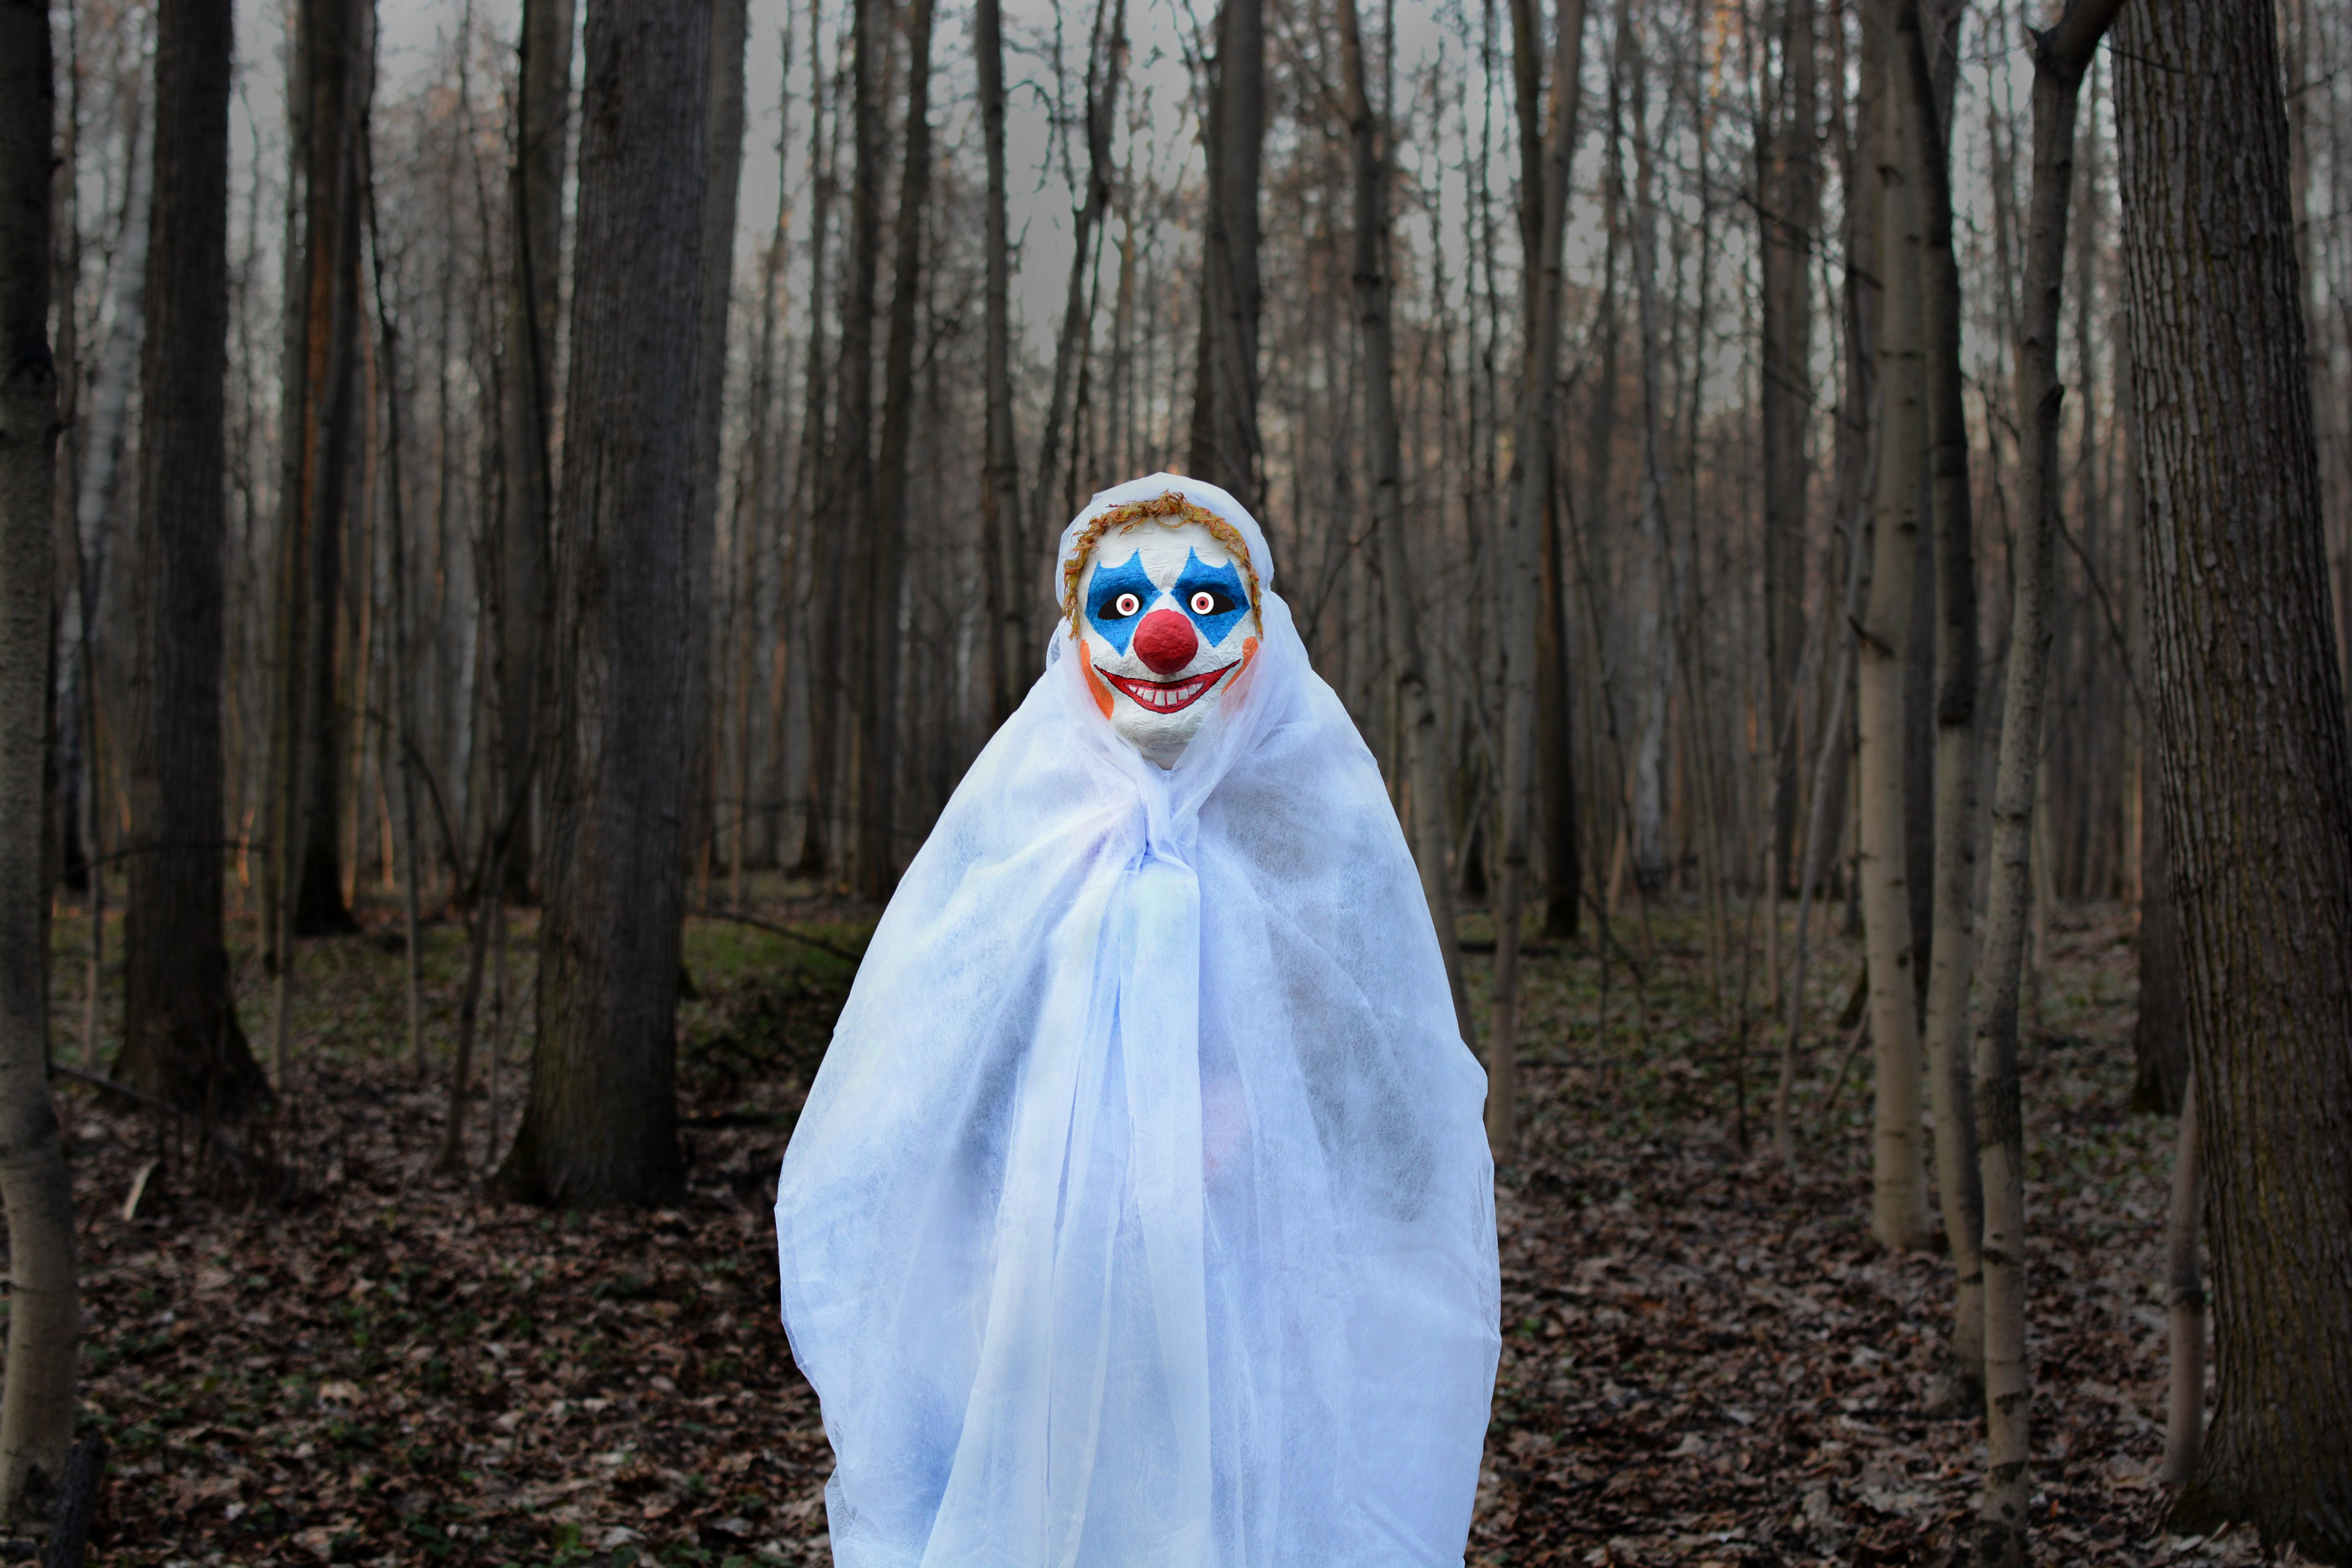 evil clown in a dark forest in a white veil